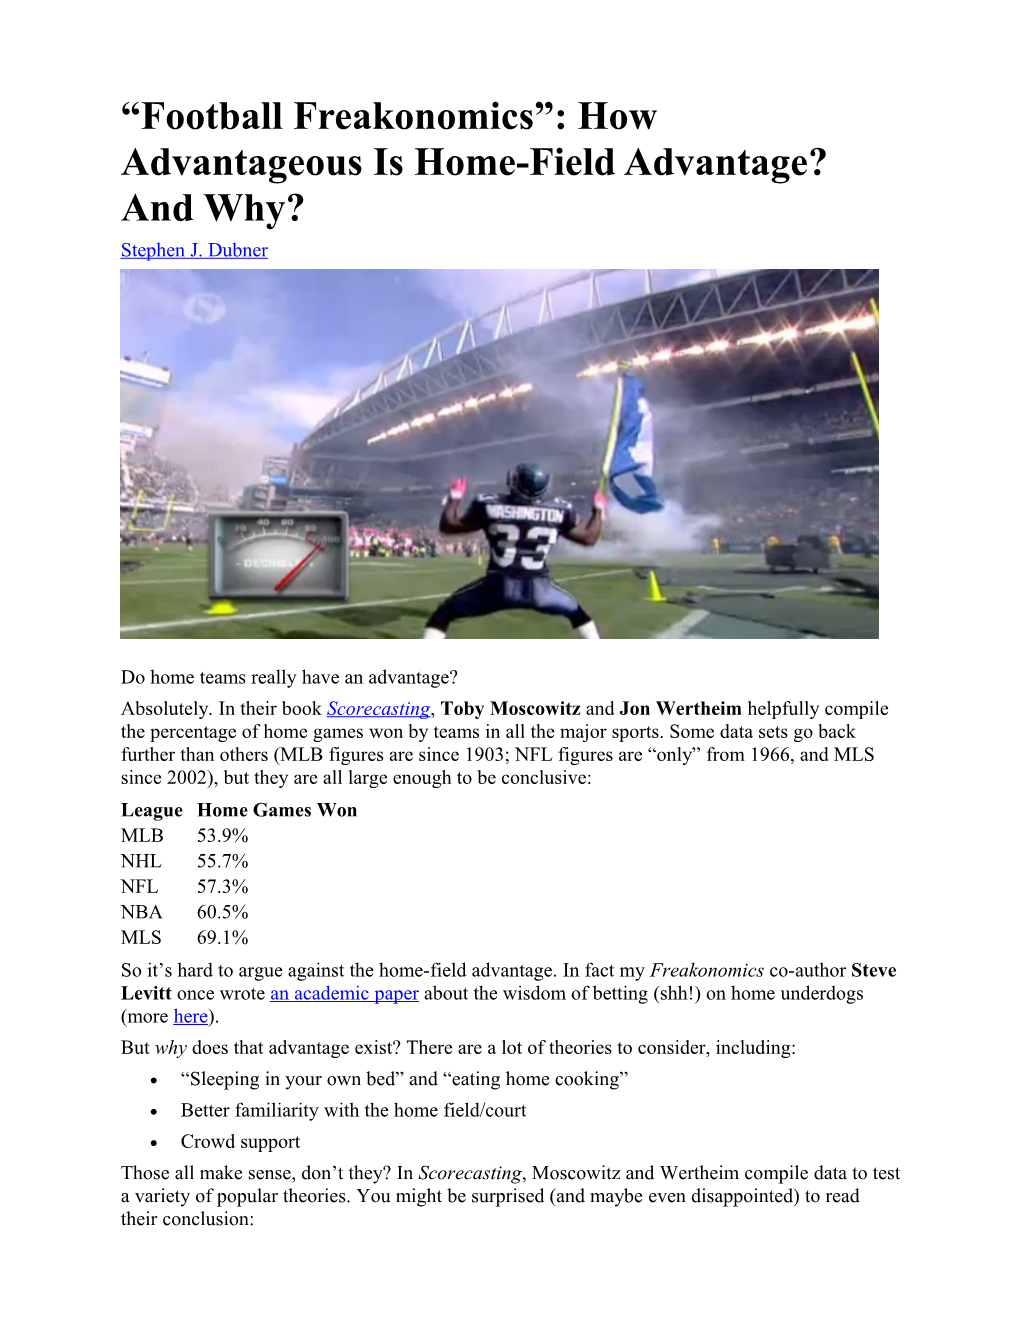 Football Freakonomics : How Advantageous Is Home-Field Advantage? and Why?